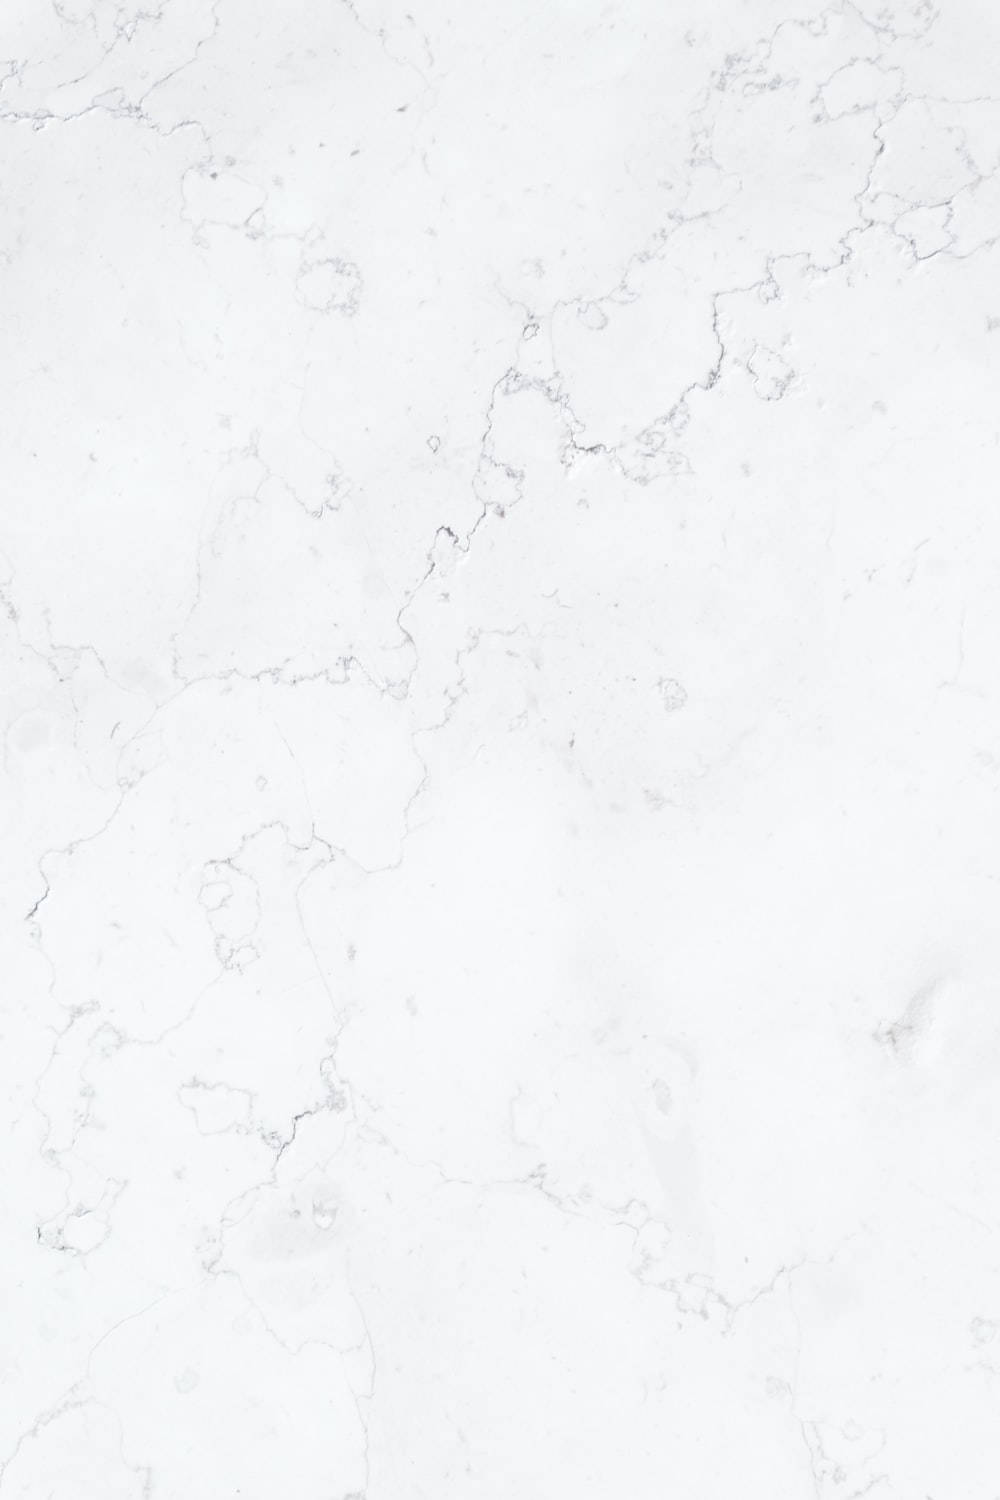 Classic Carrara Black White Marble Iphone Wallpaper